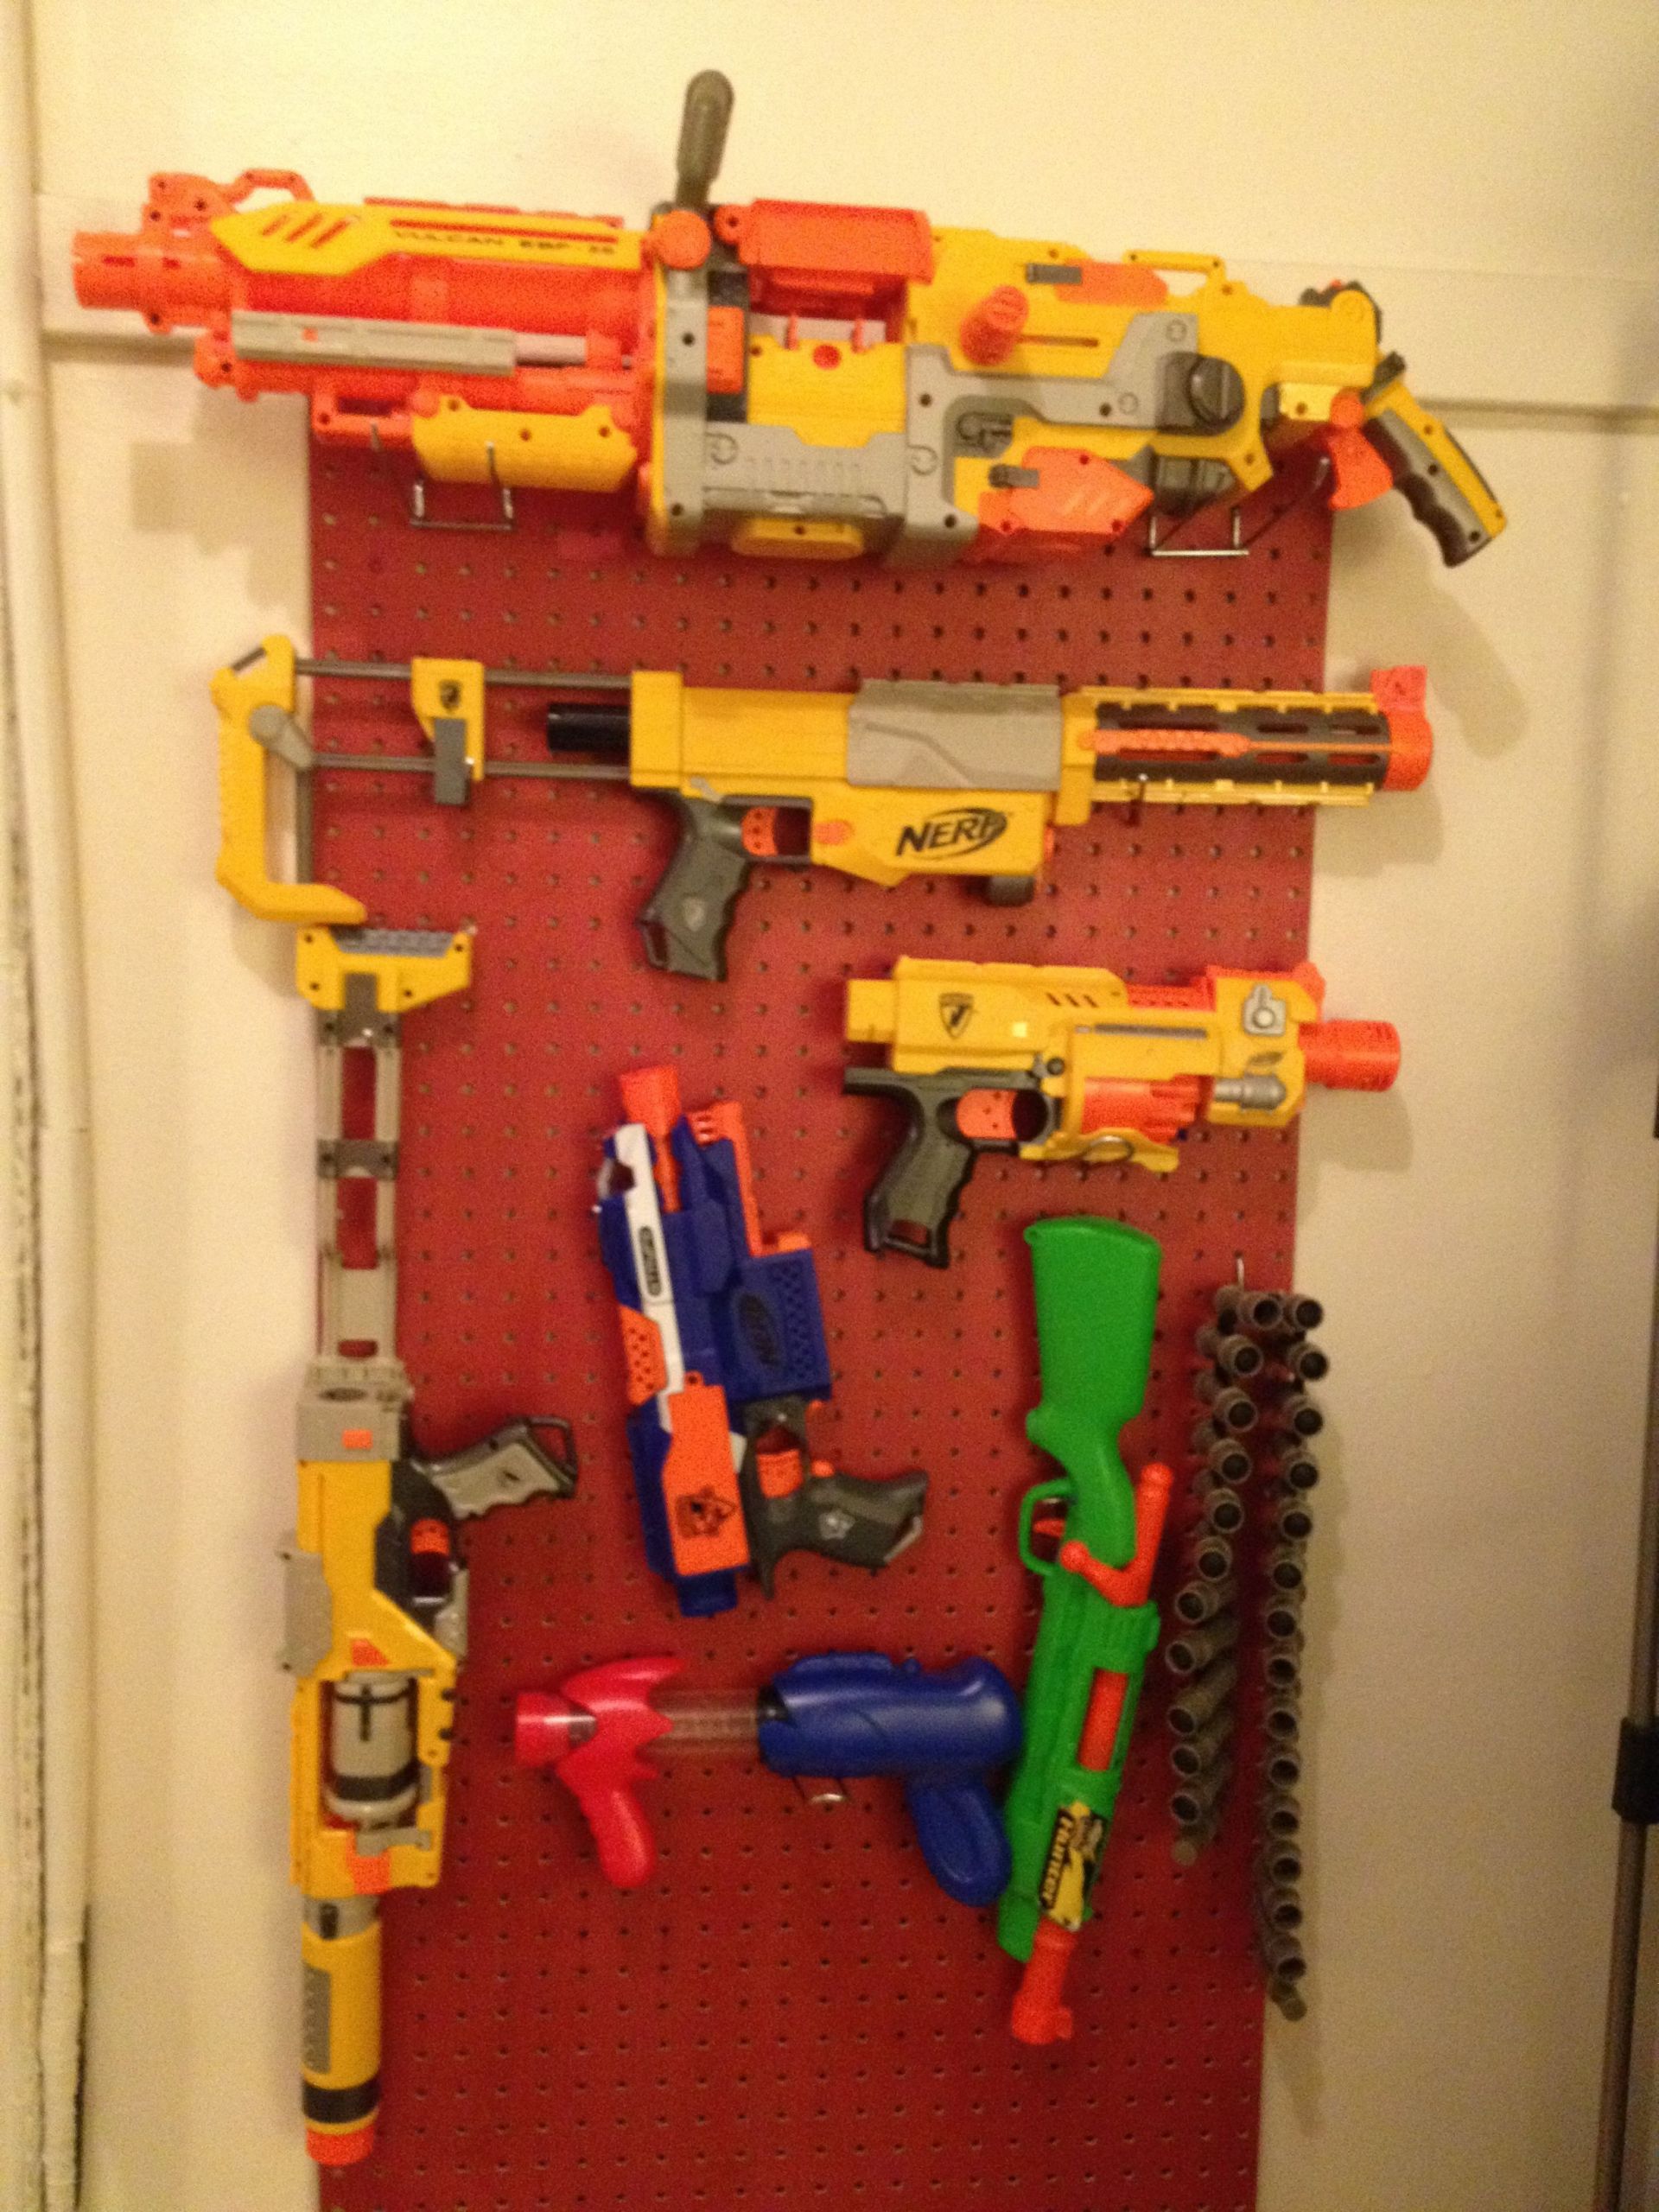 Nerf Gun Rack DIY
 Diy nerf gun peg board gun rack organizer